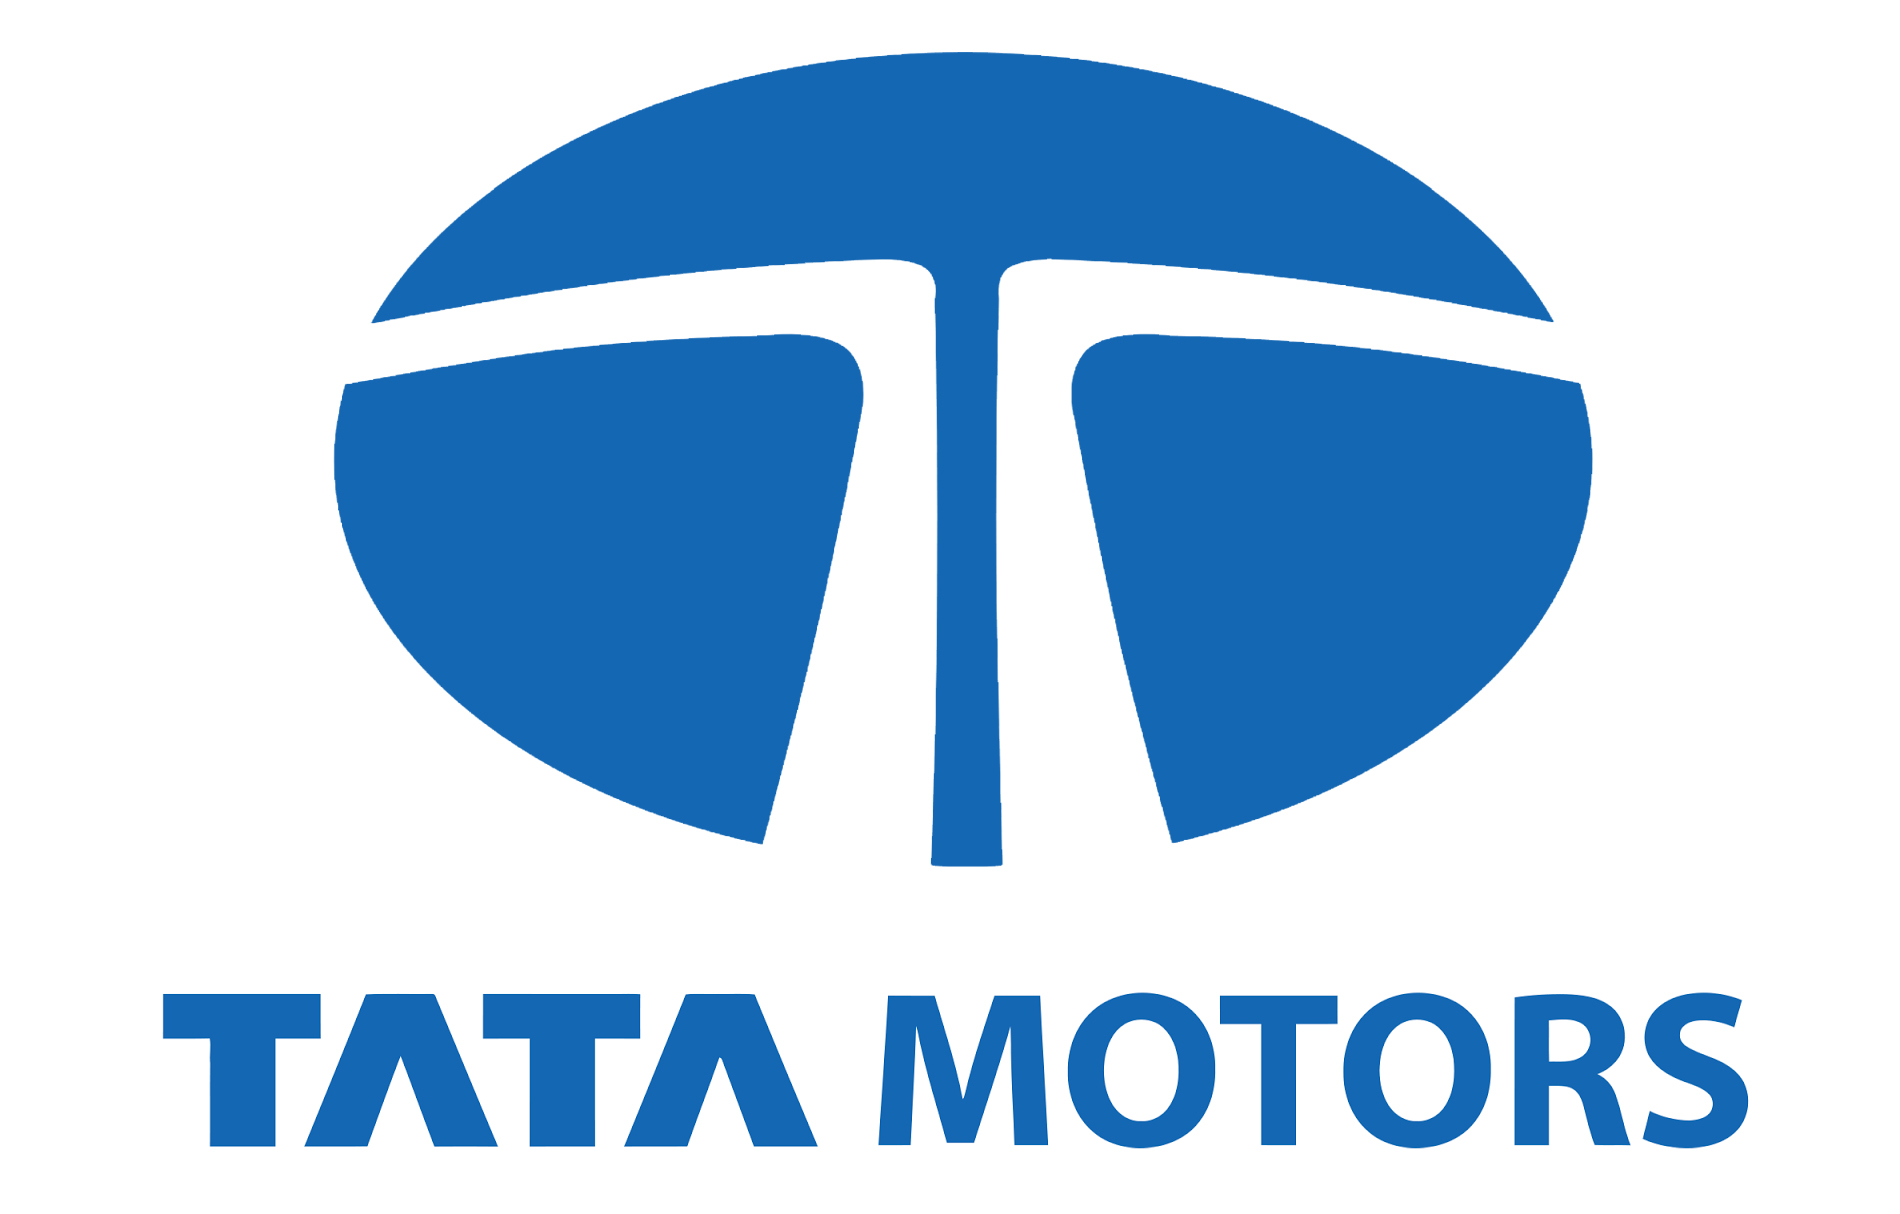 Tata Motors Cars Showroom - Inderjit Cars|Repair Services|Automotive